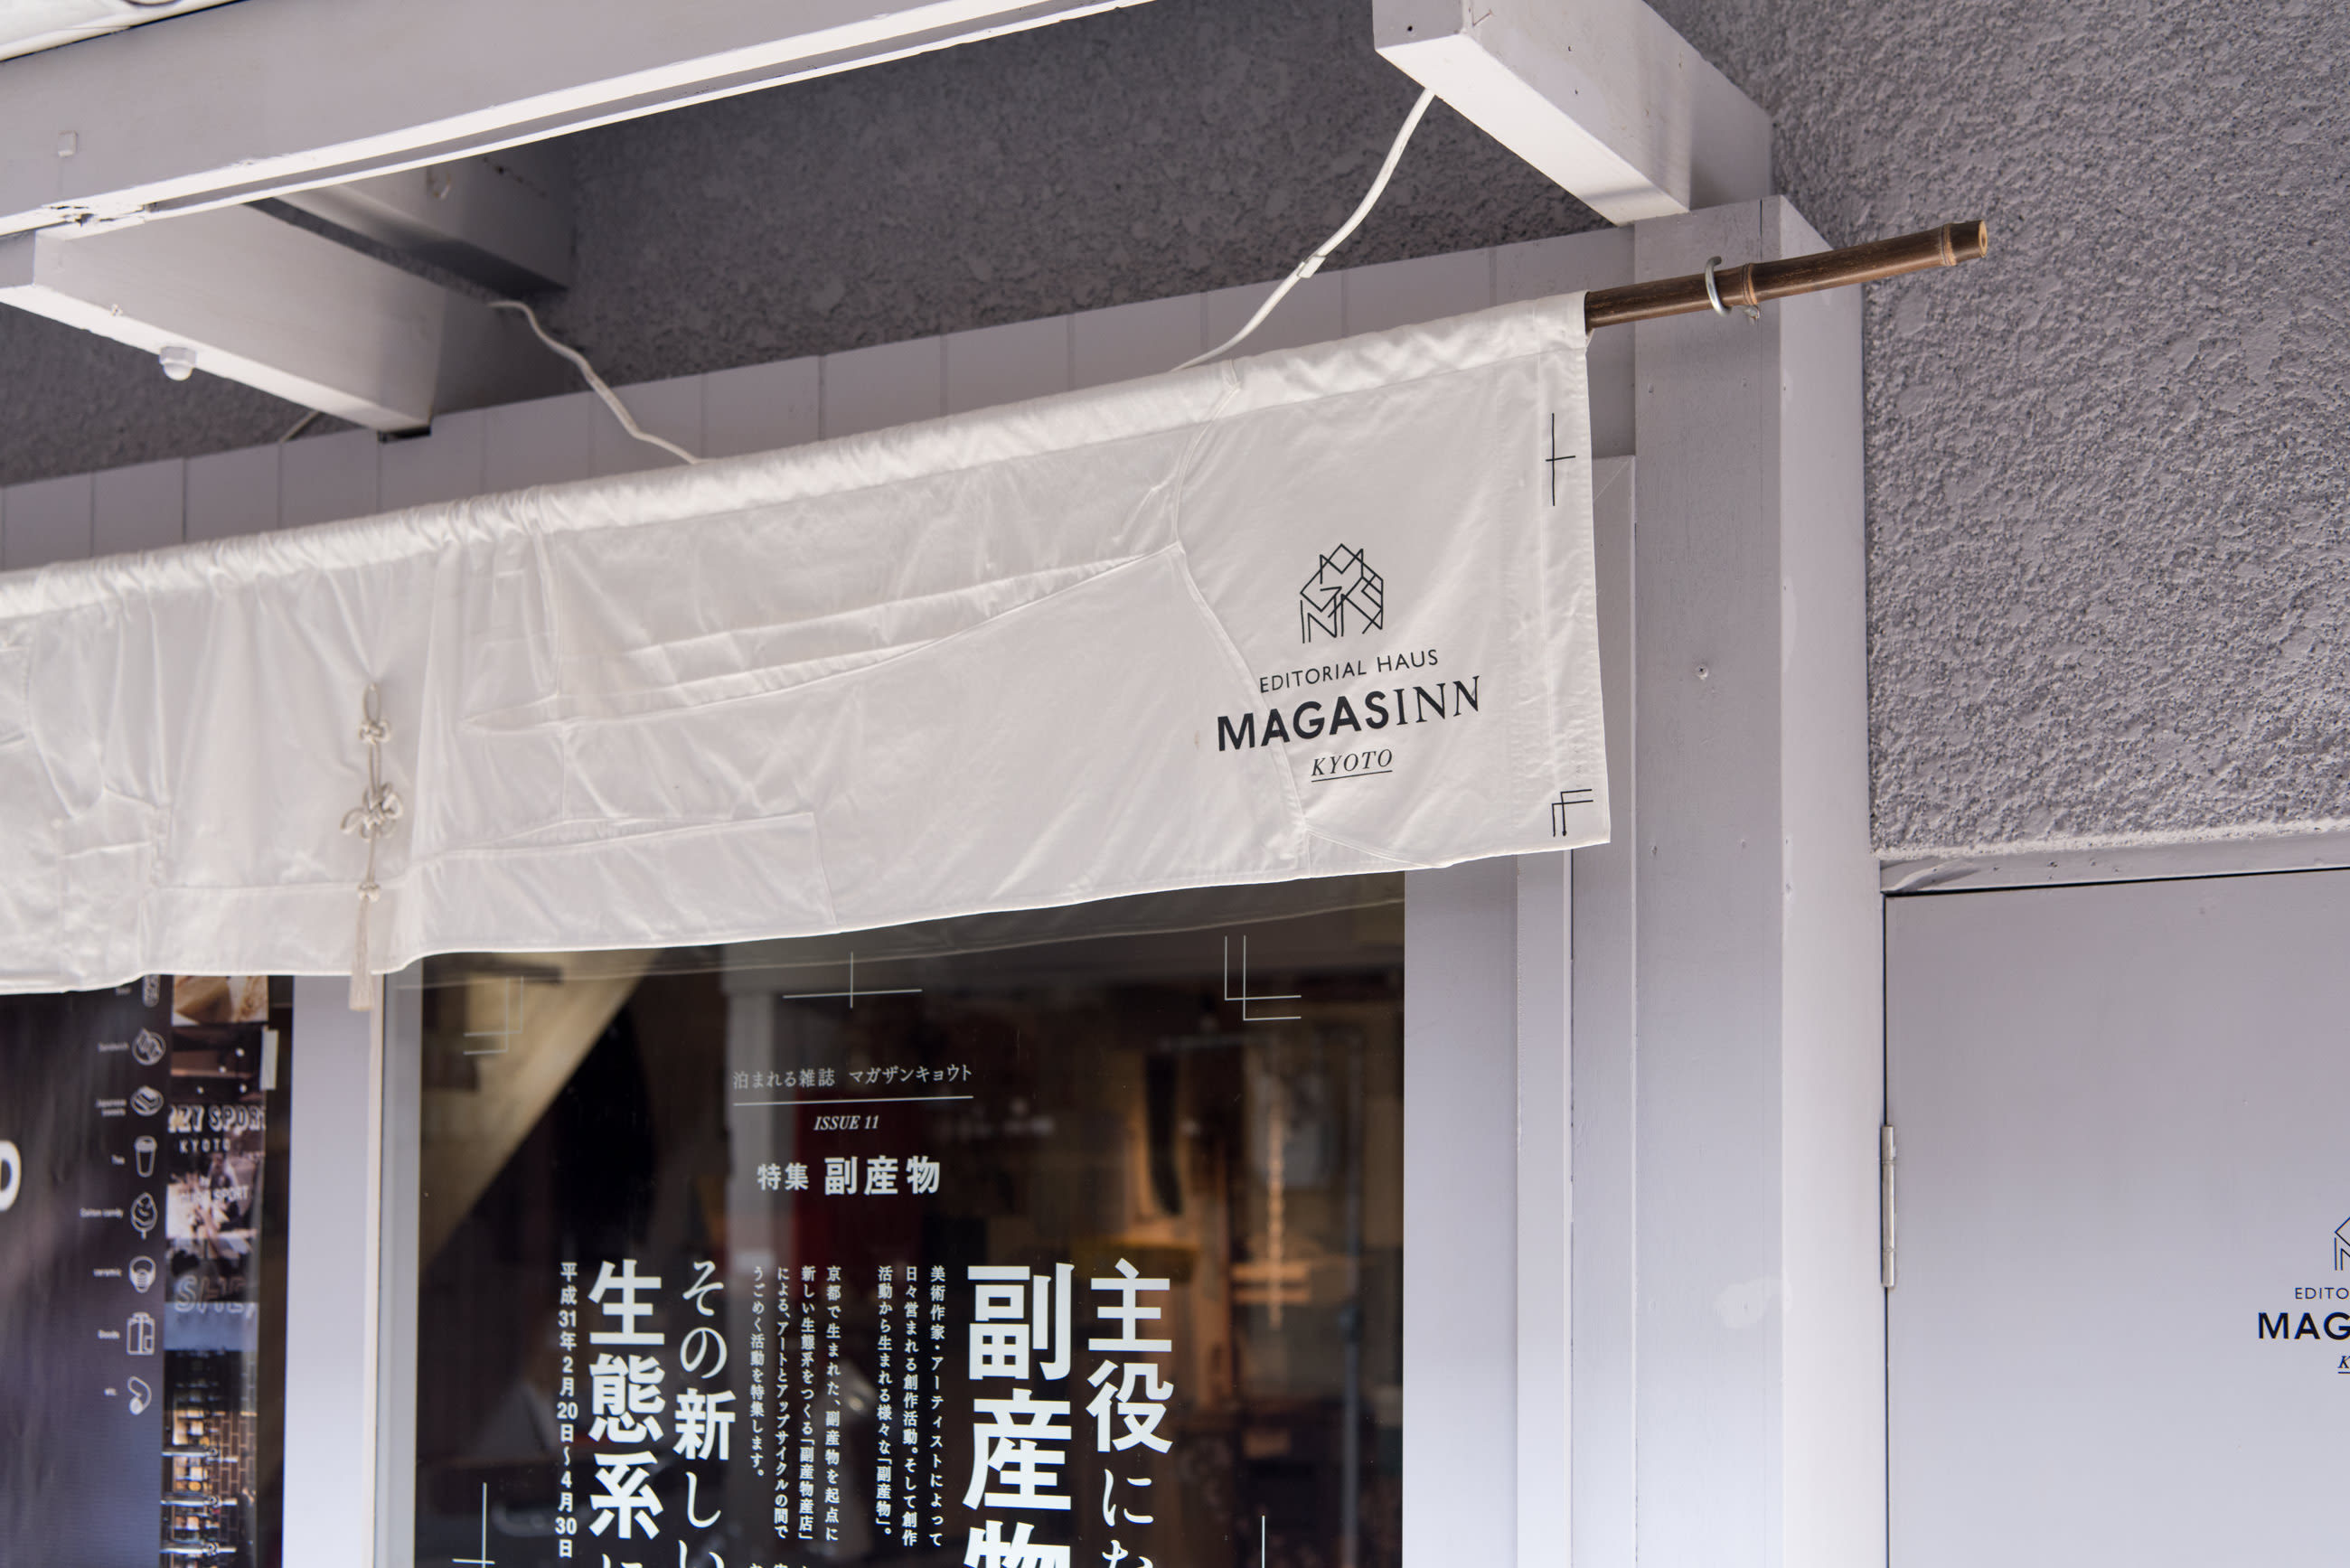 Entrance of Magazinn Kyoto